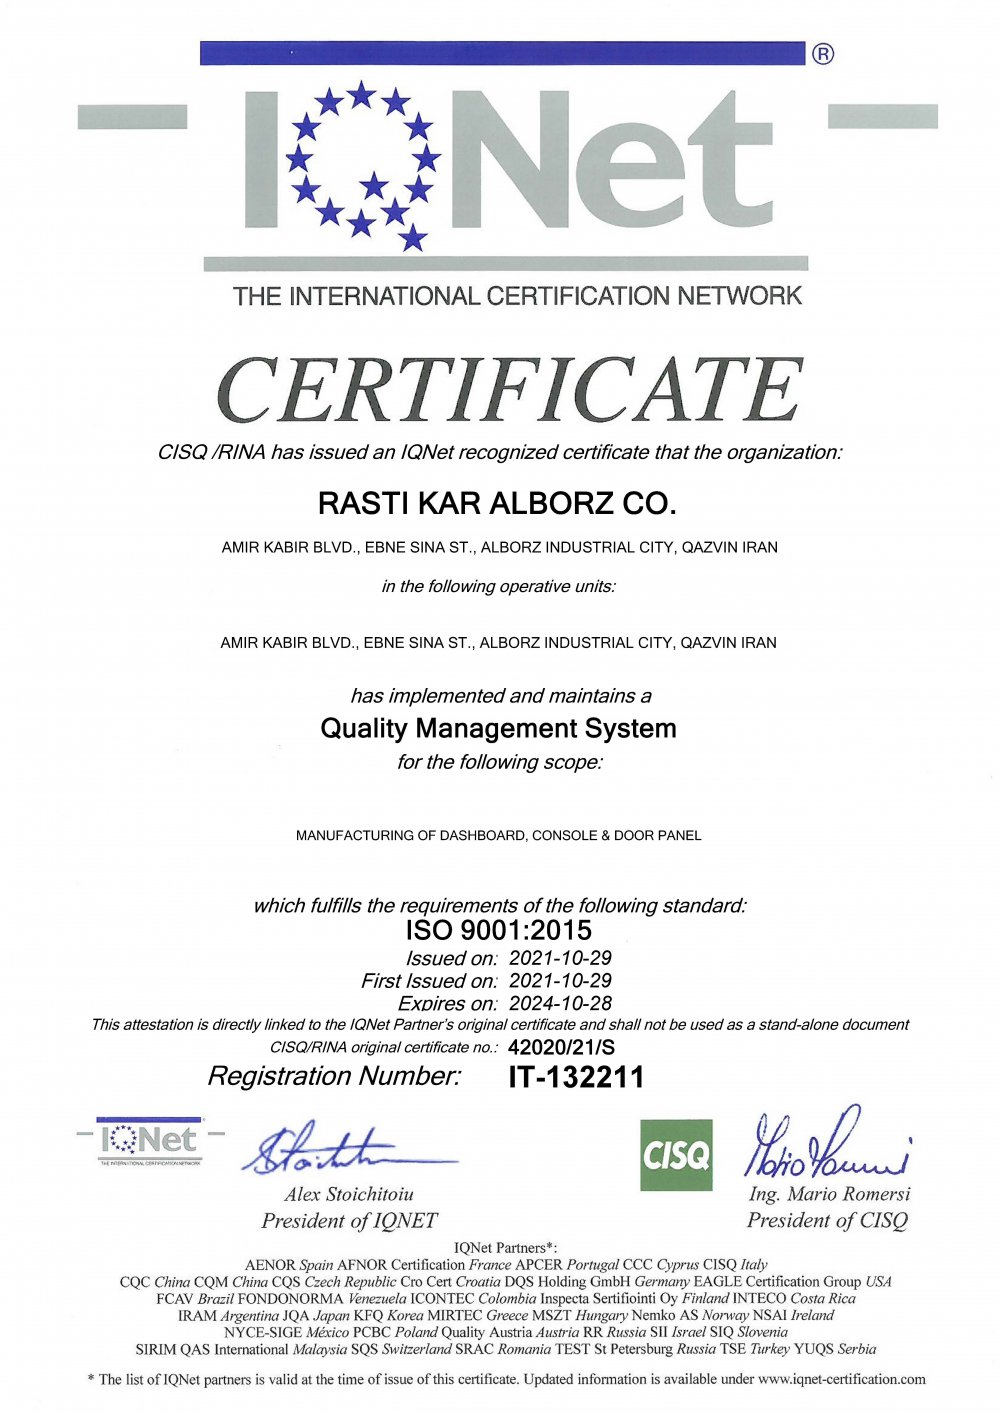  Certificate IQNET Rasti Kar Alborz